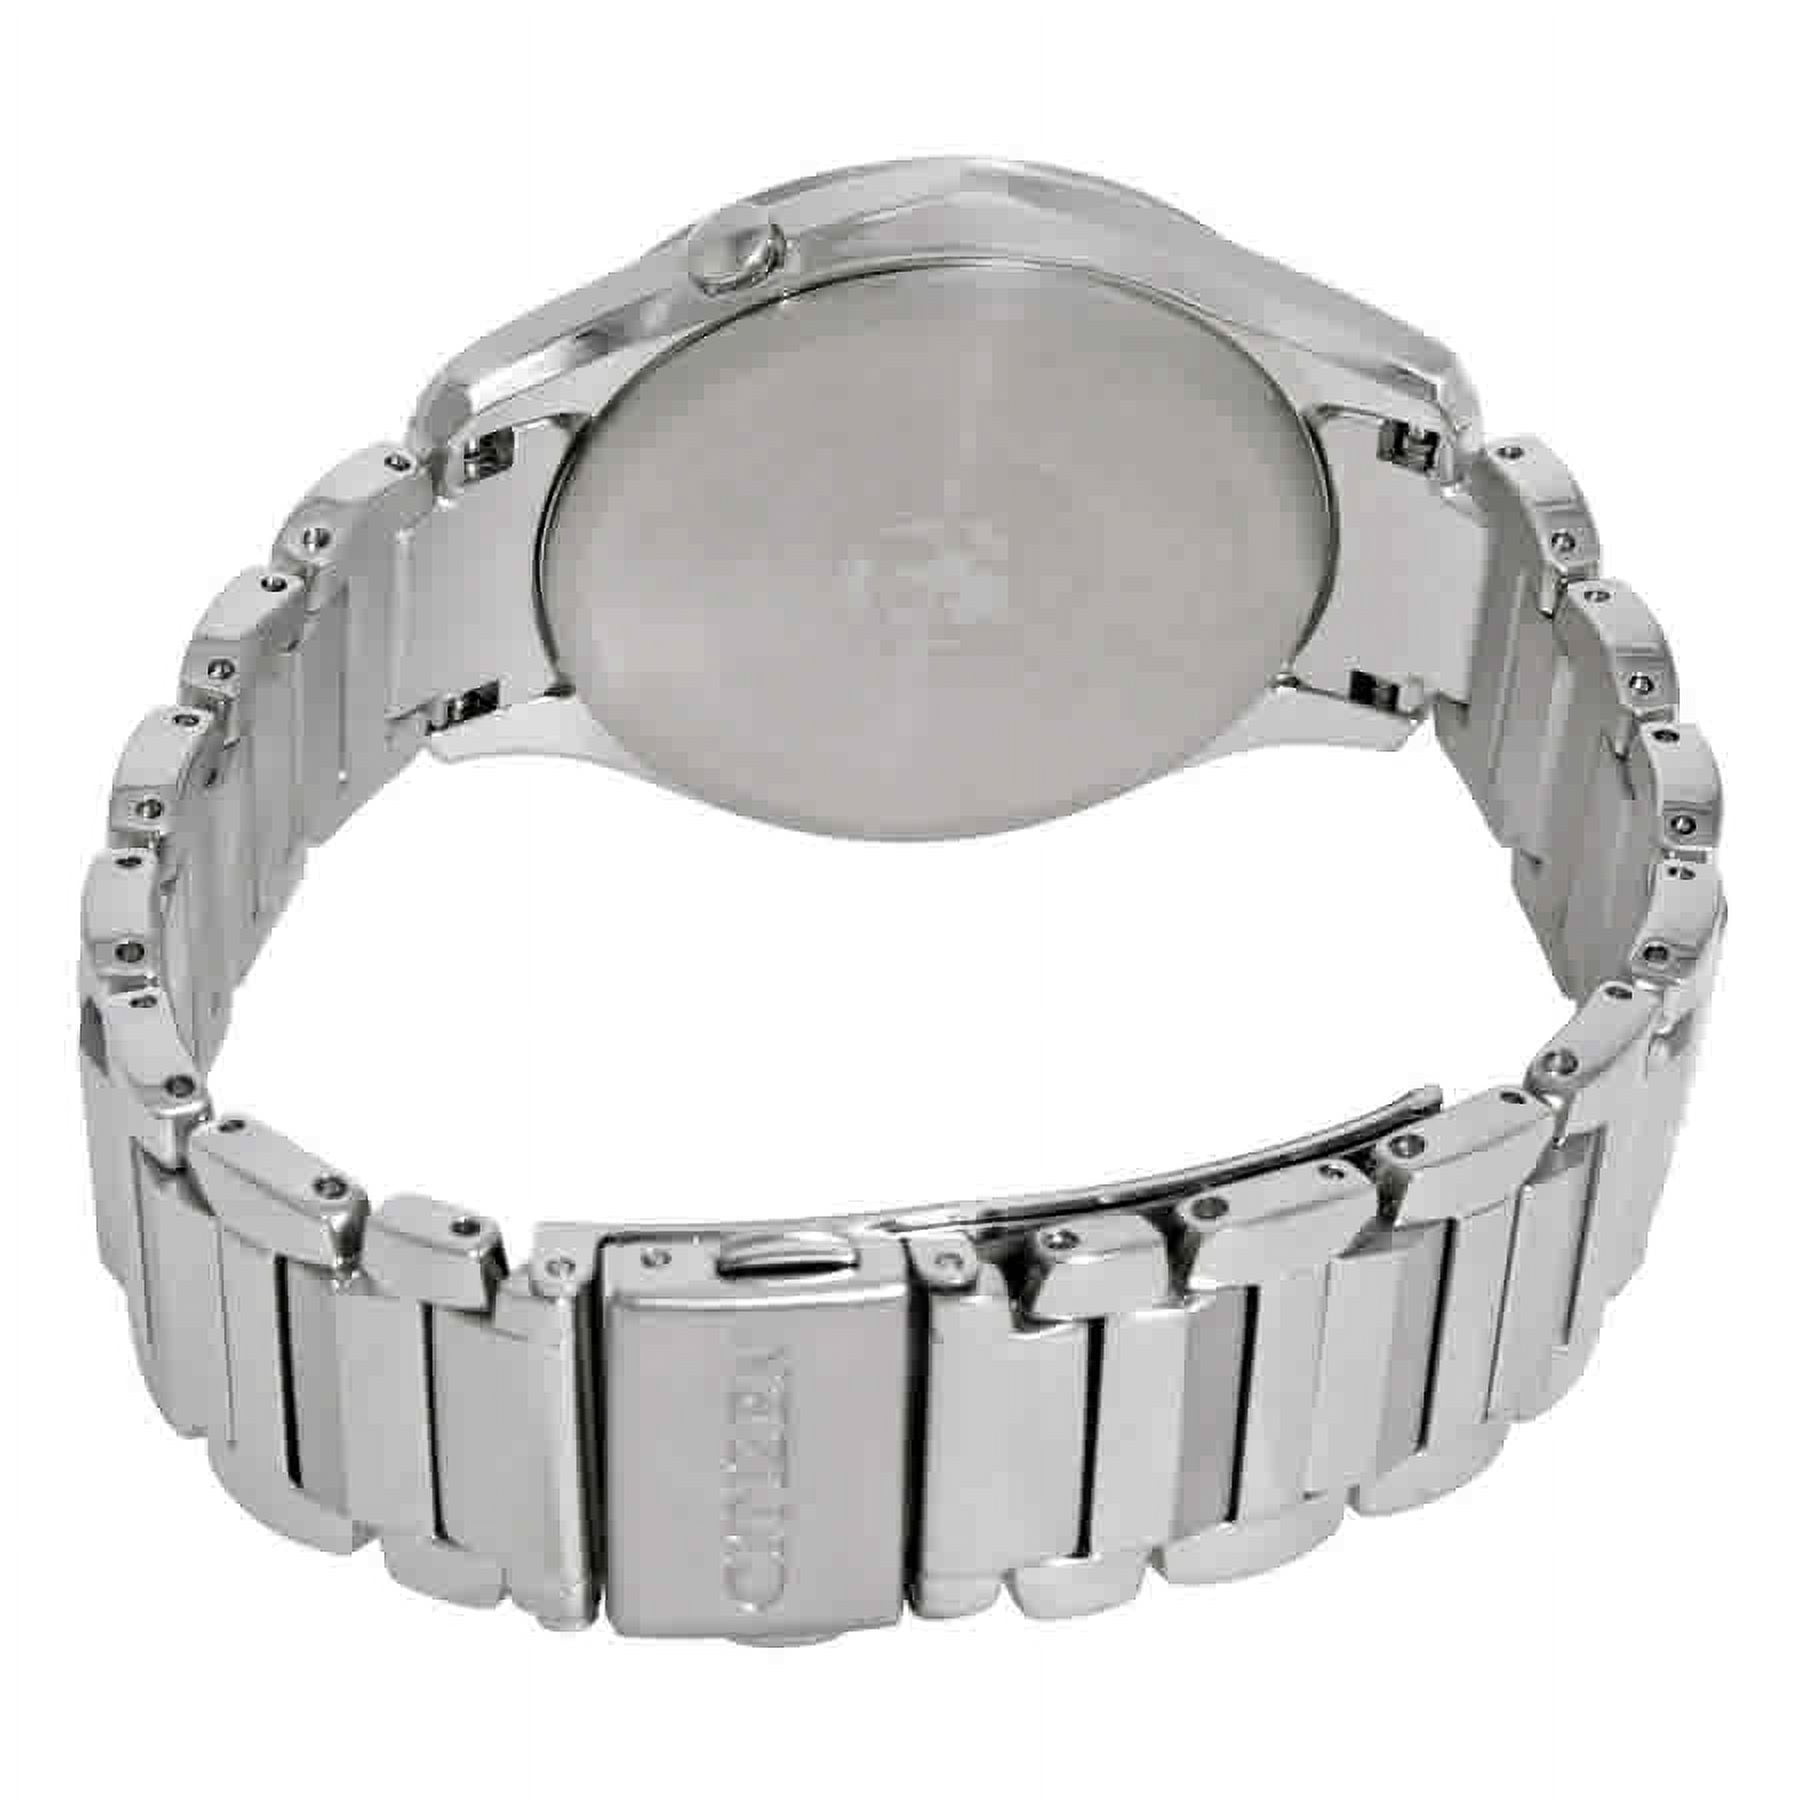 CITIZEN Women's Modena Silver Dial Stainless Steel Watch EM0590-54A